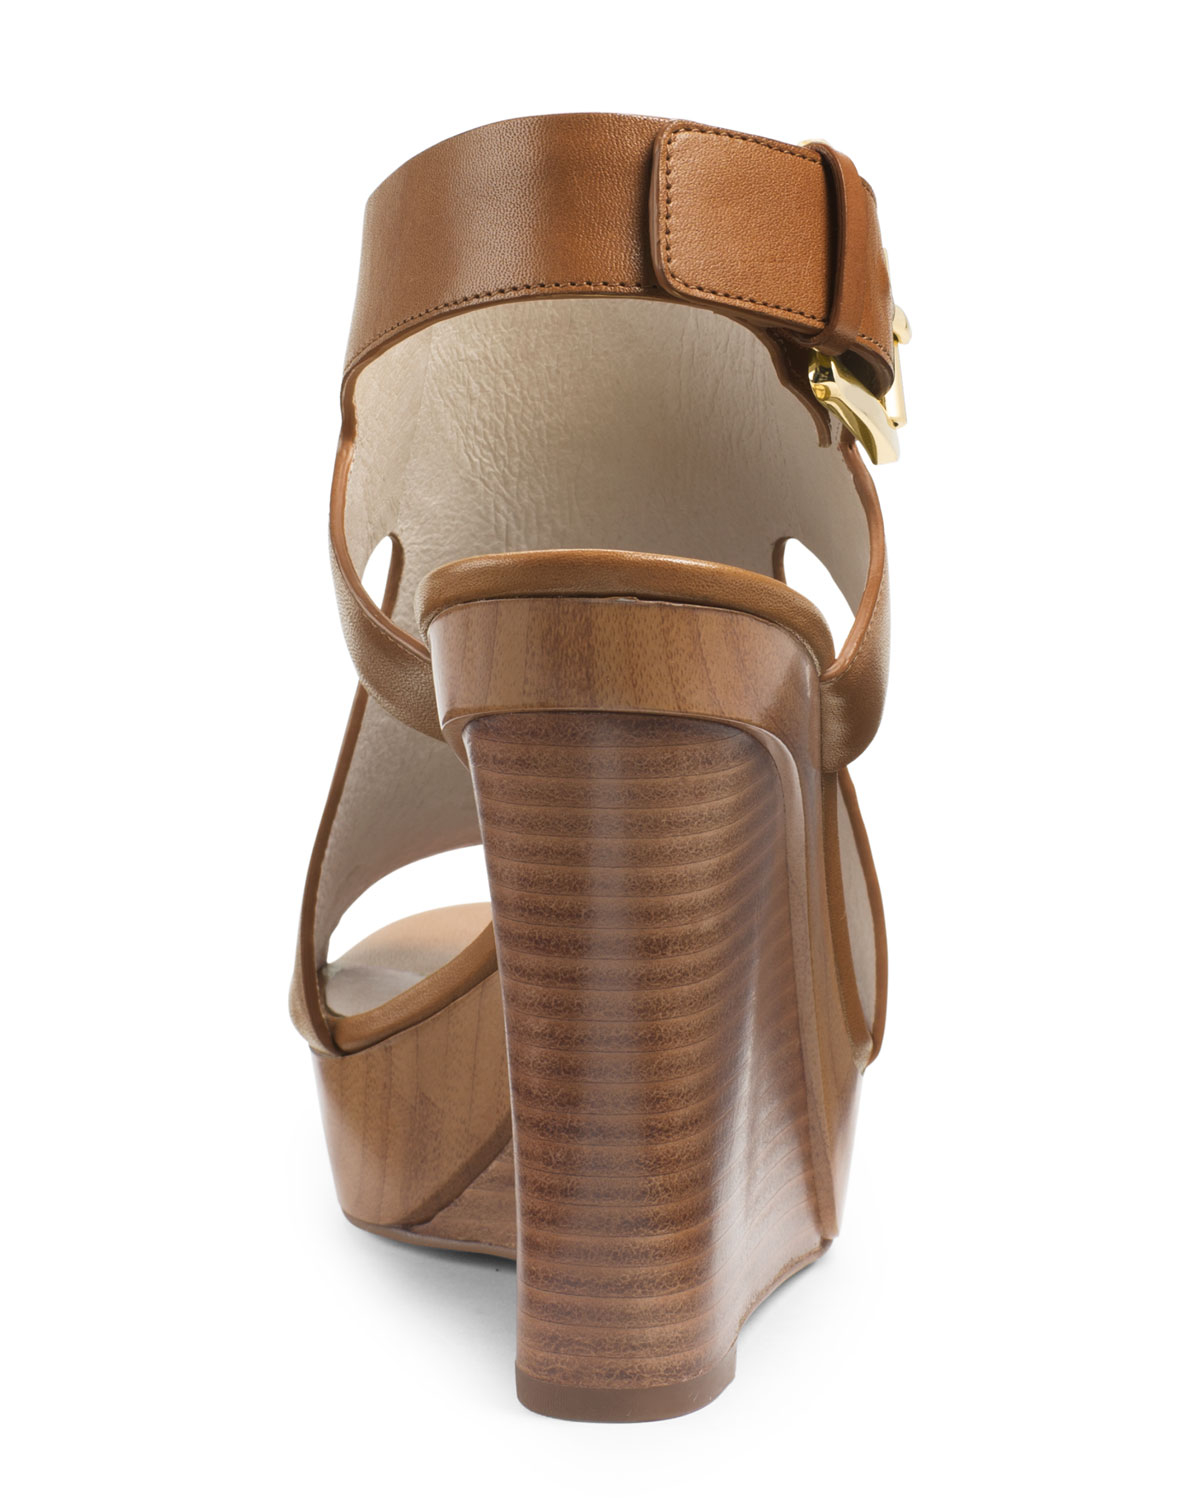 Michael Kors Leather Wedge Sandal in Brown - Lyst